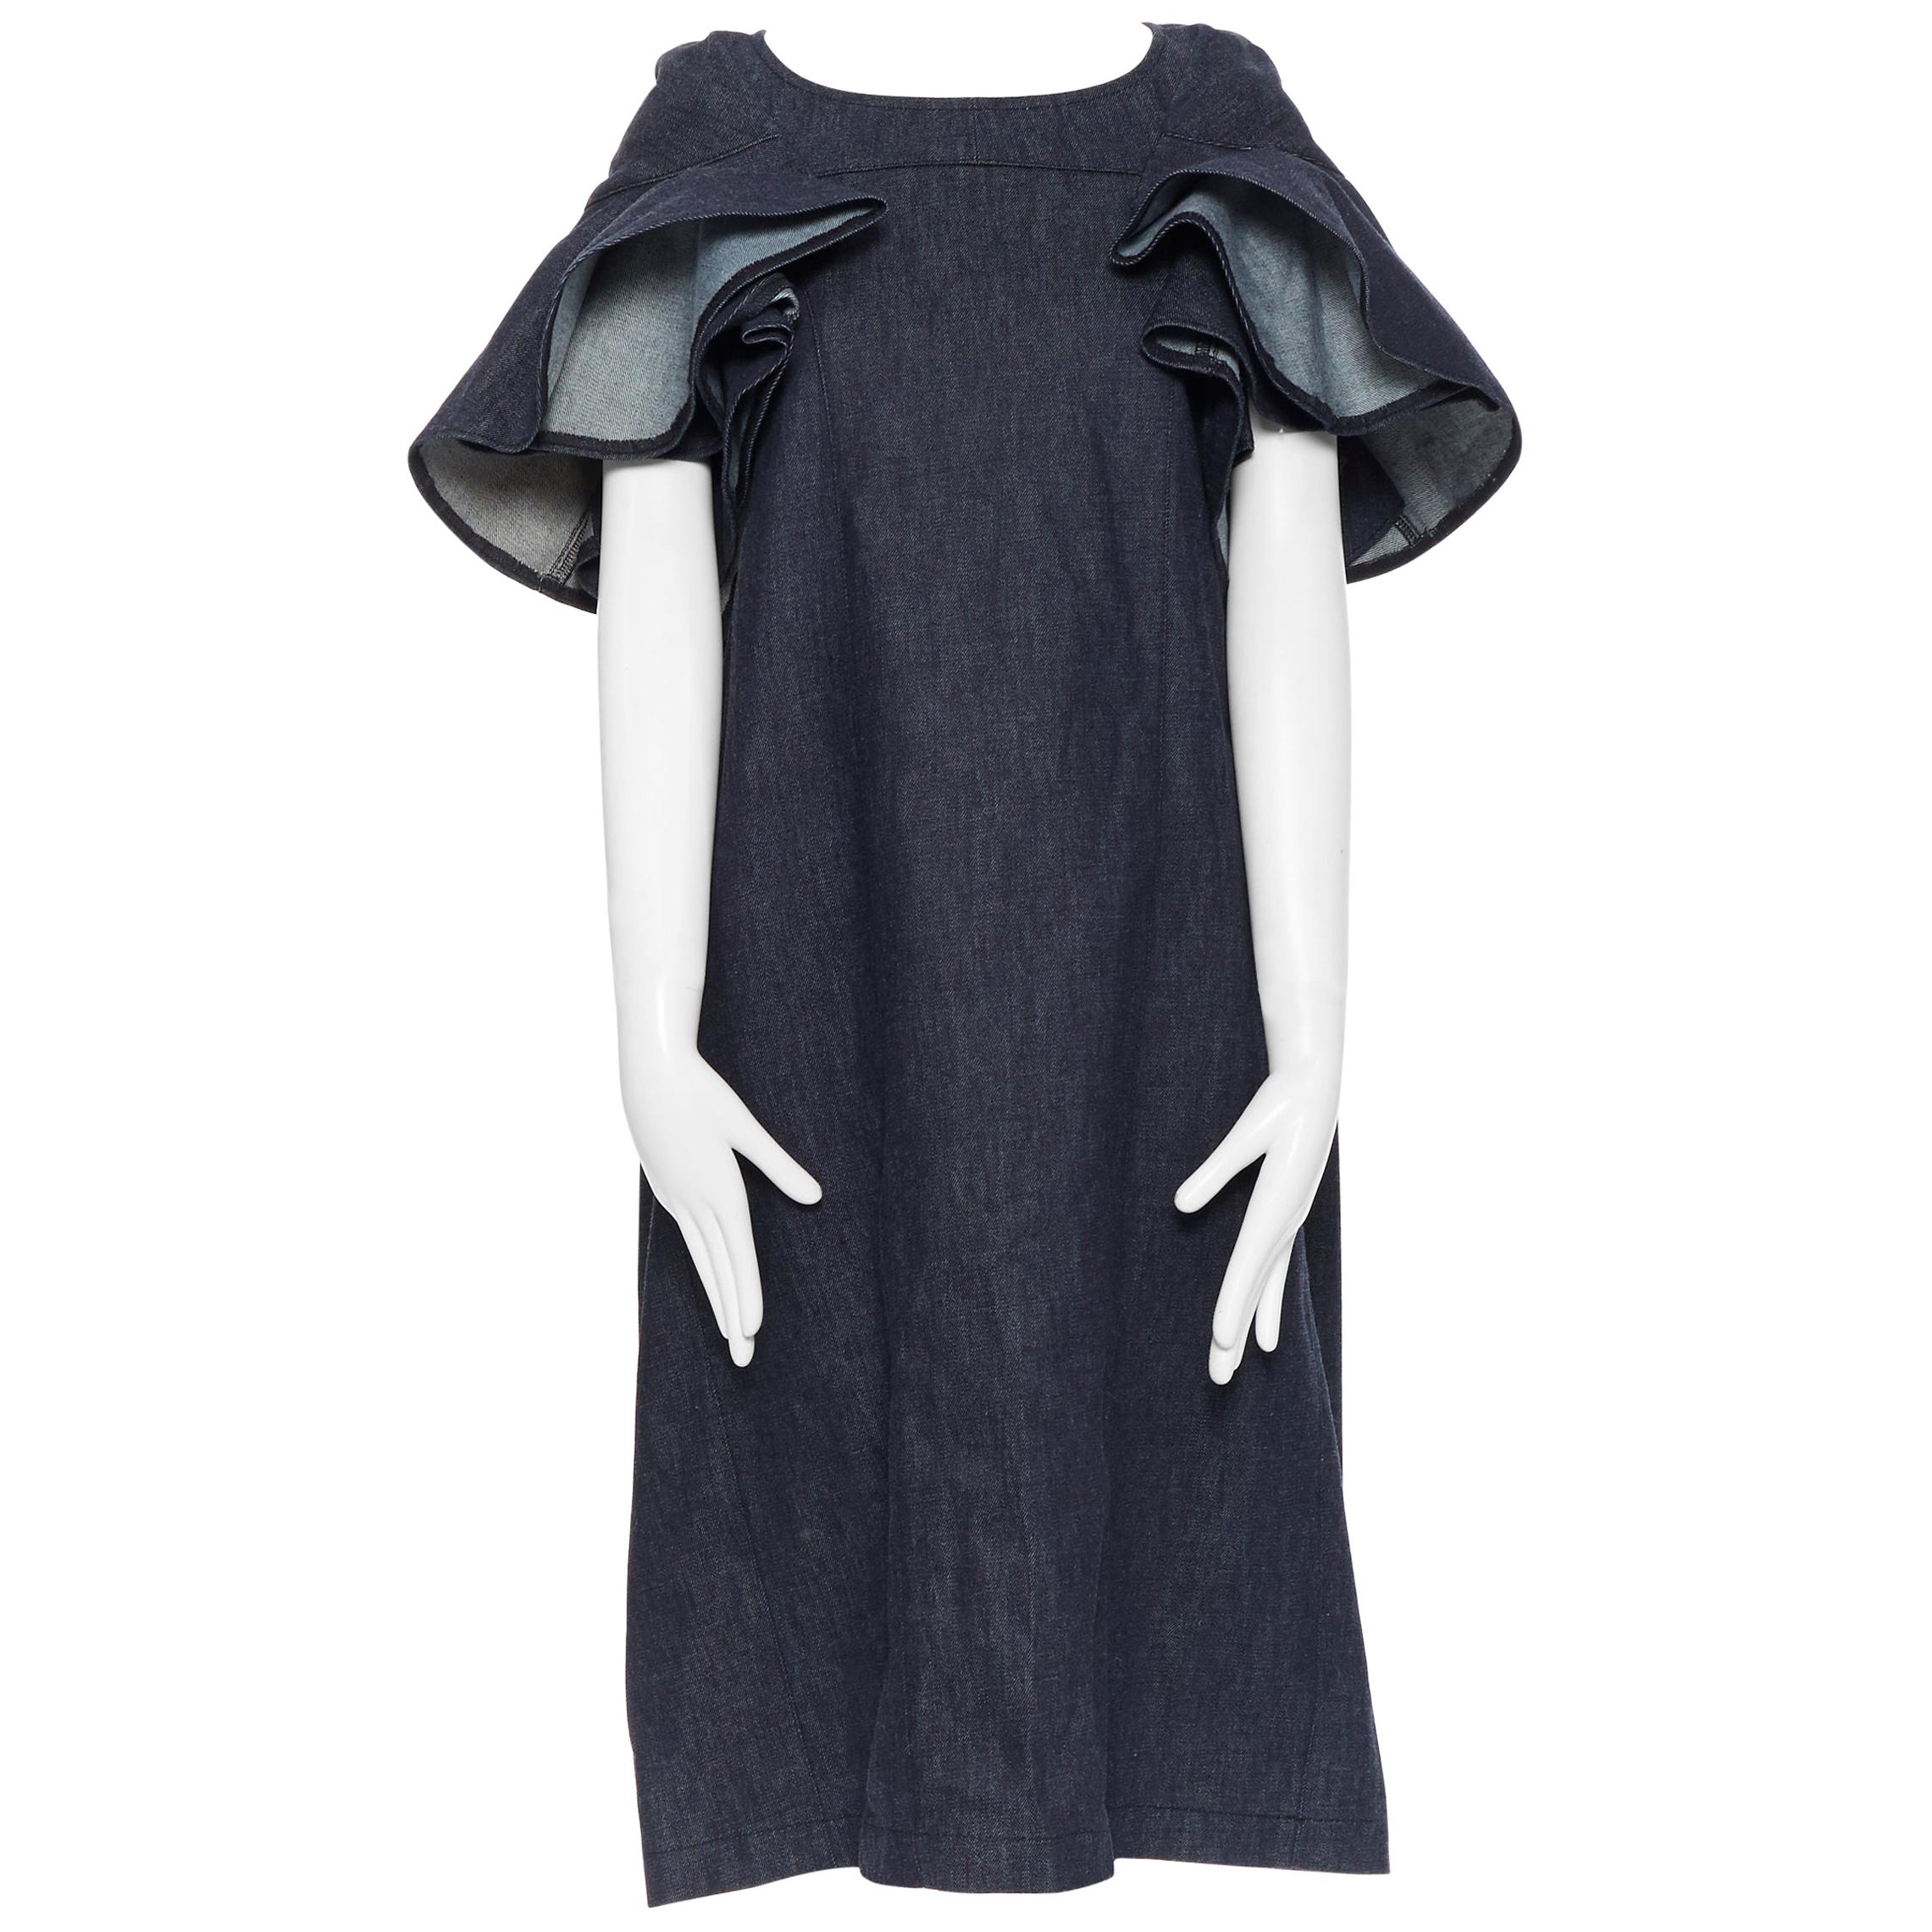 TRICOT COMME DES GARCONS dark indigo blue denim ruffle sleeve casual dress S